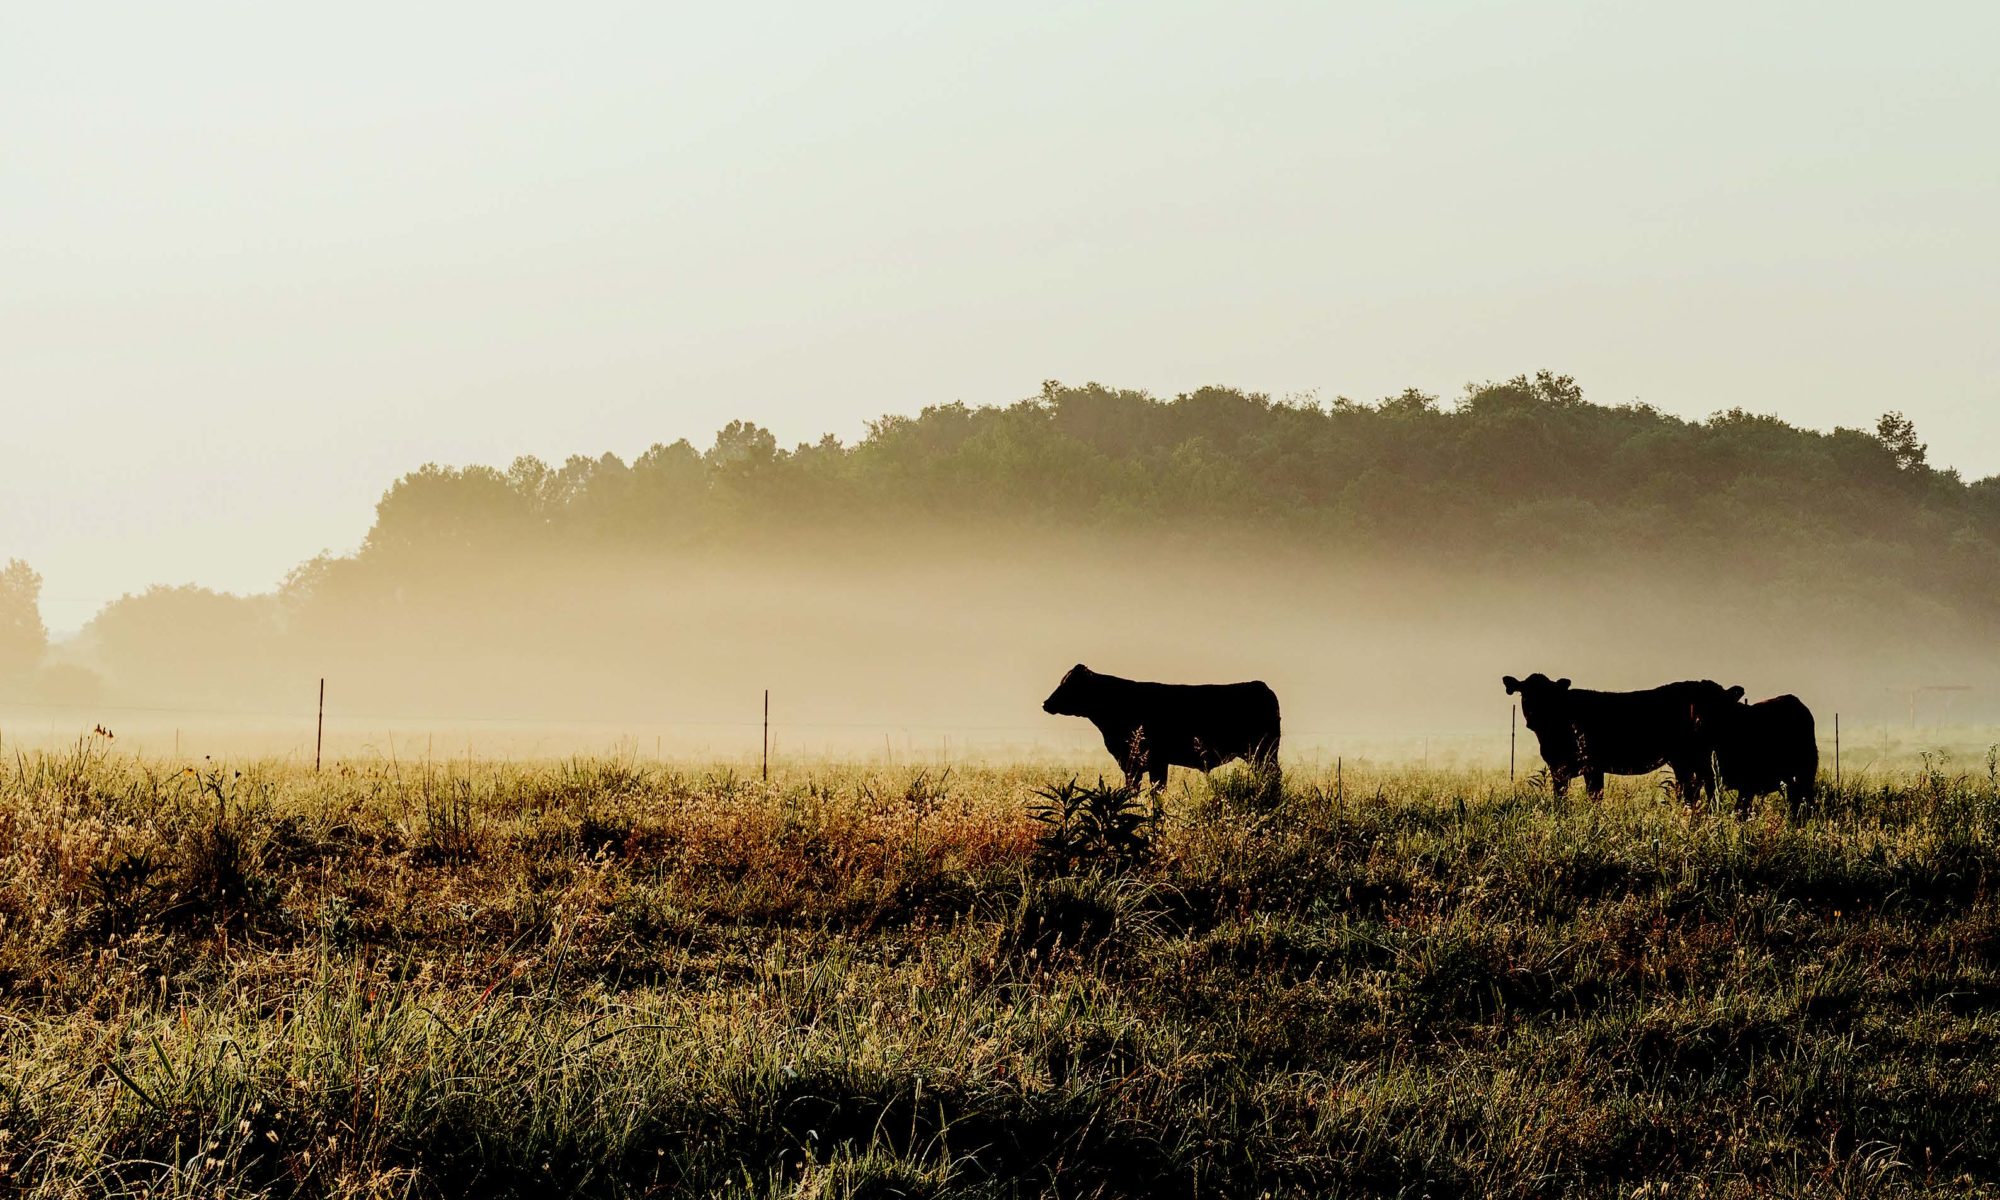 Cattle standing in a native grasslands field